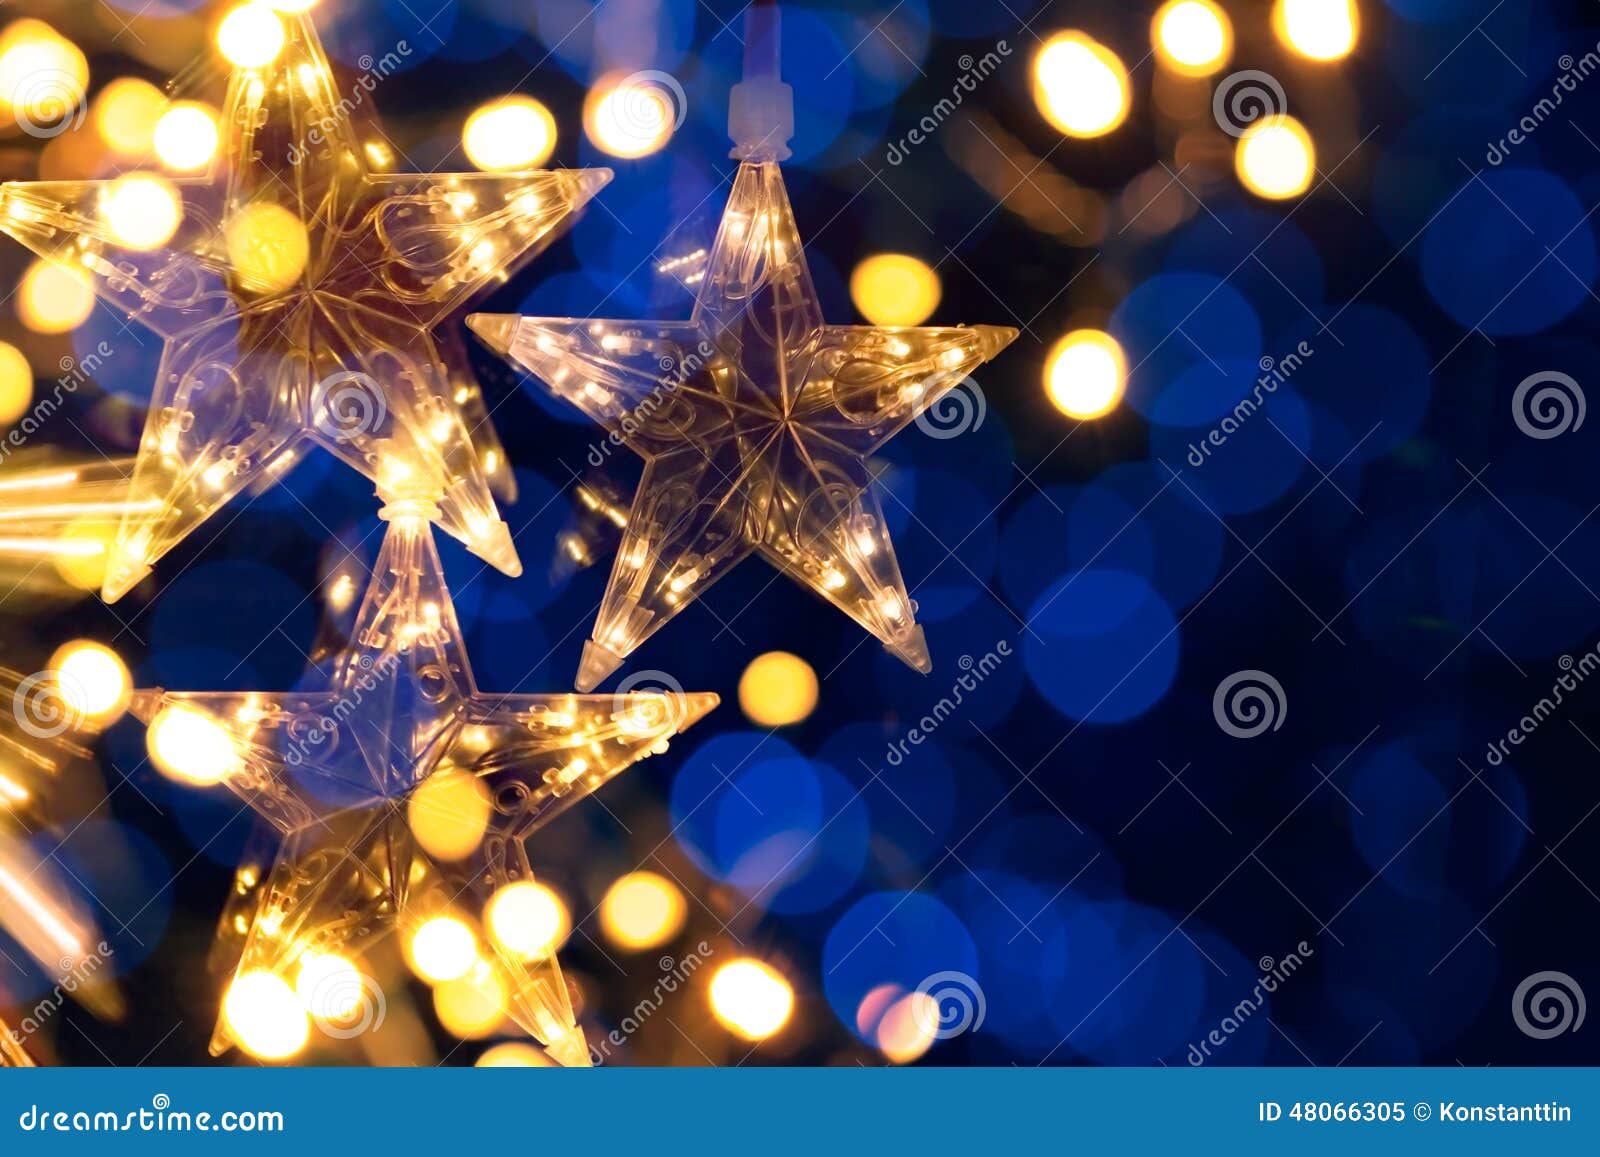 Art Christmas trees light stock image. Image of season - 48066305